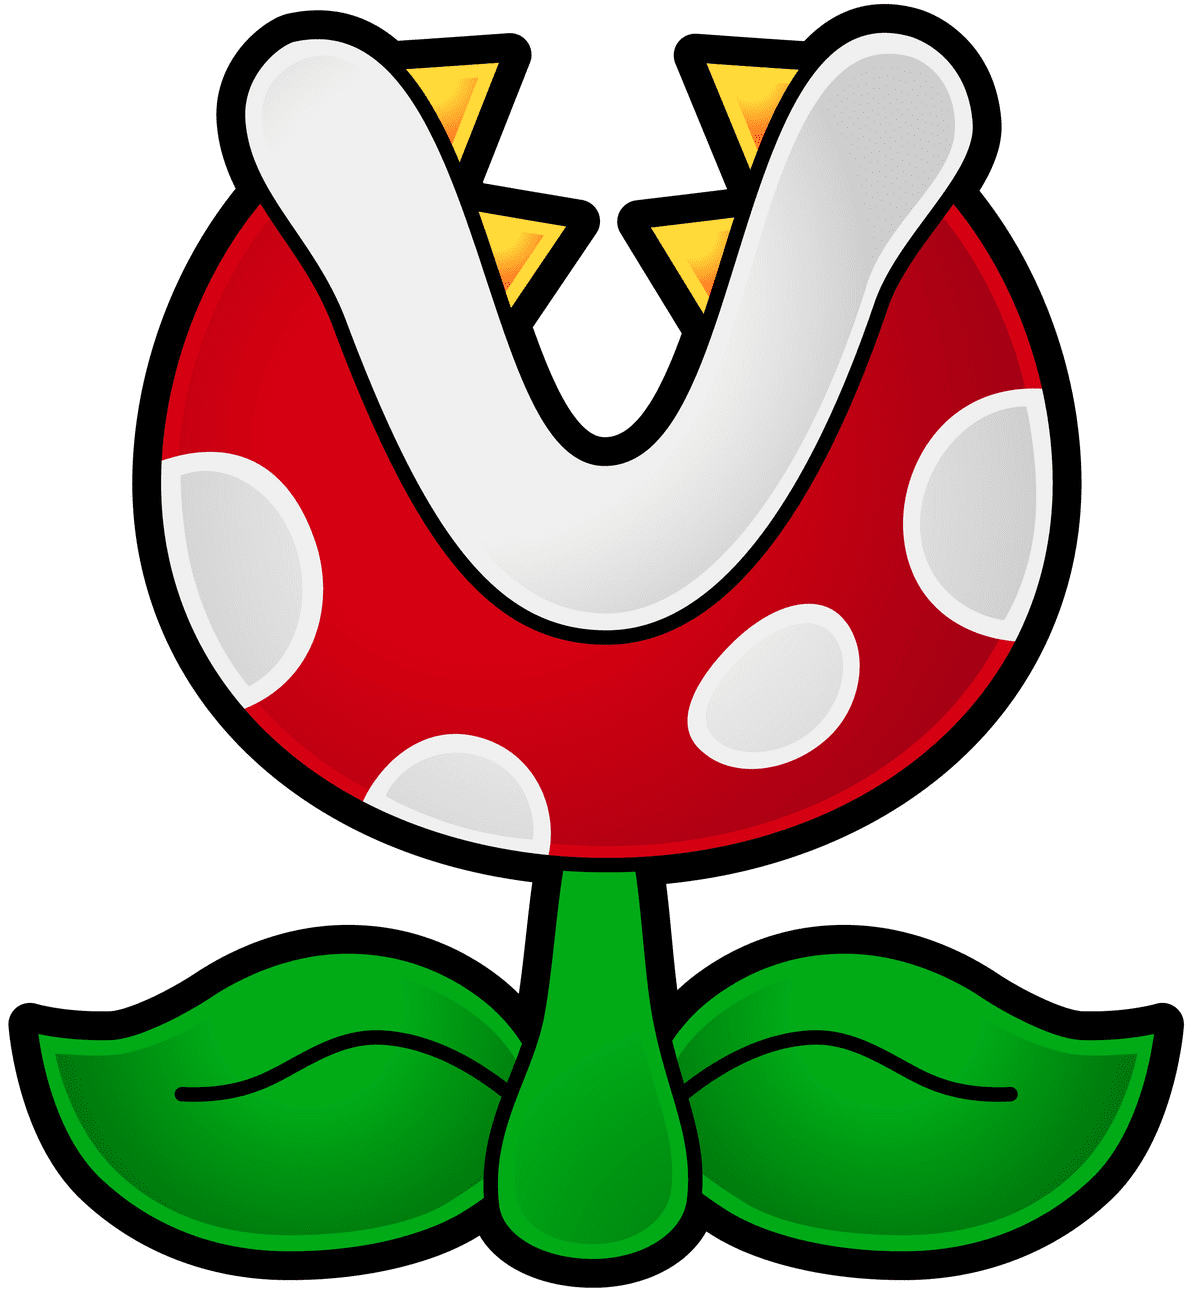 Mario images clipart 4